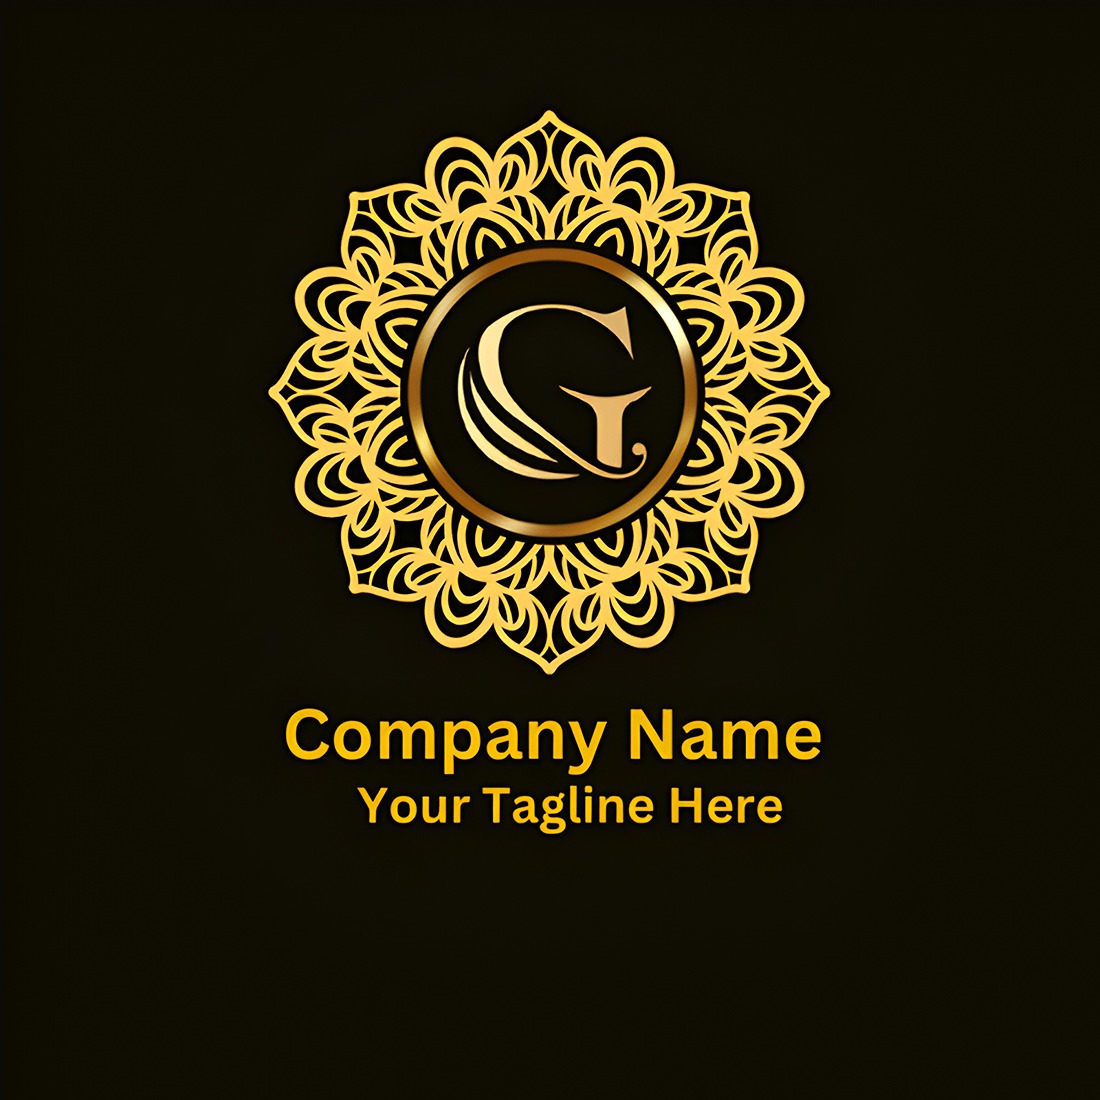 G - Luxury Letter Logo Design Template cover image.